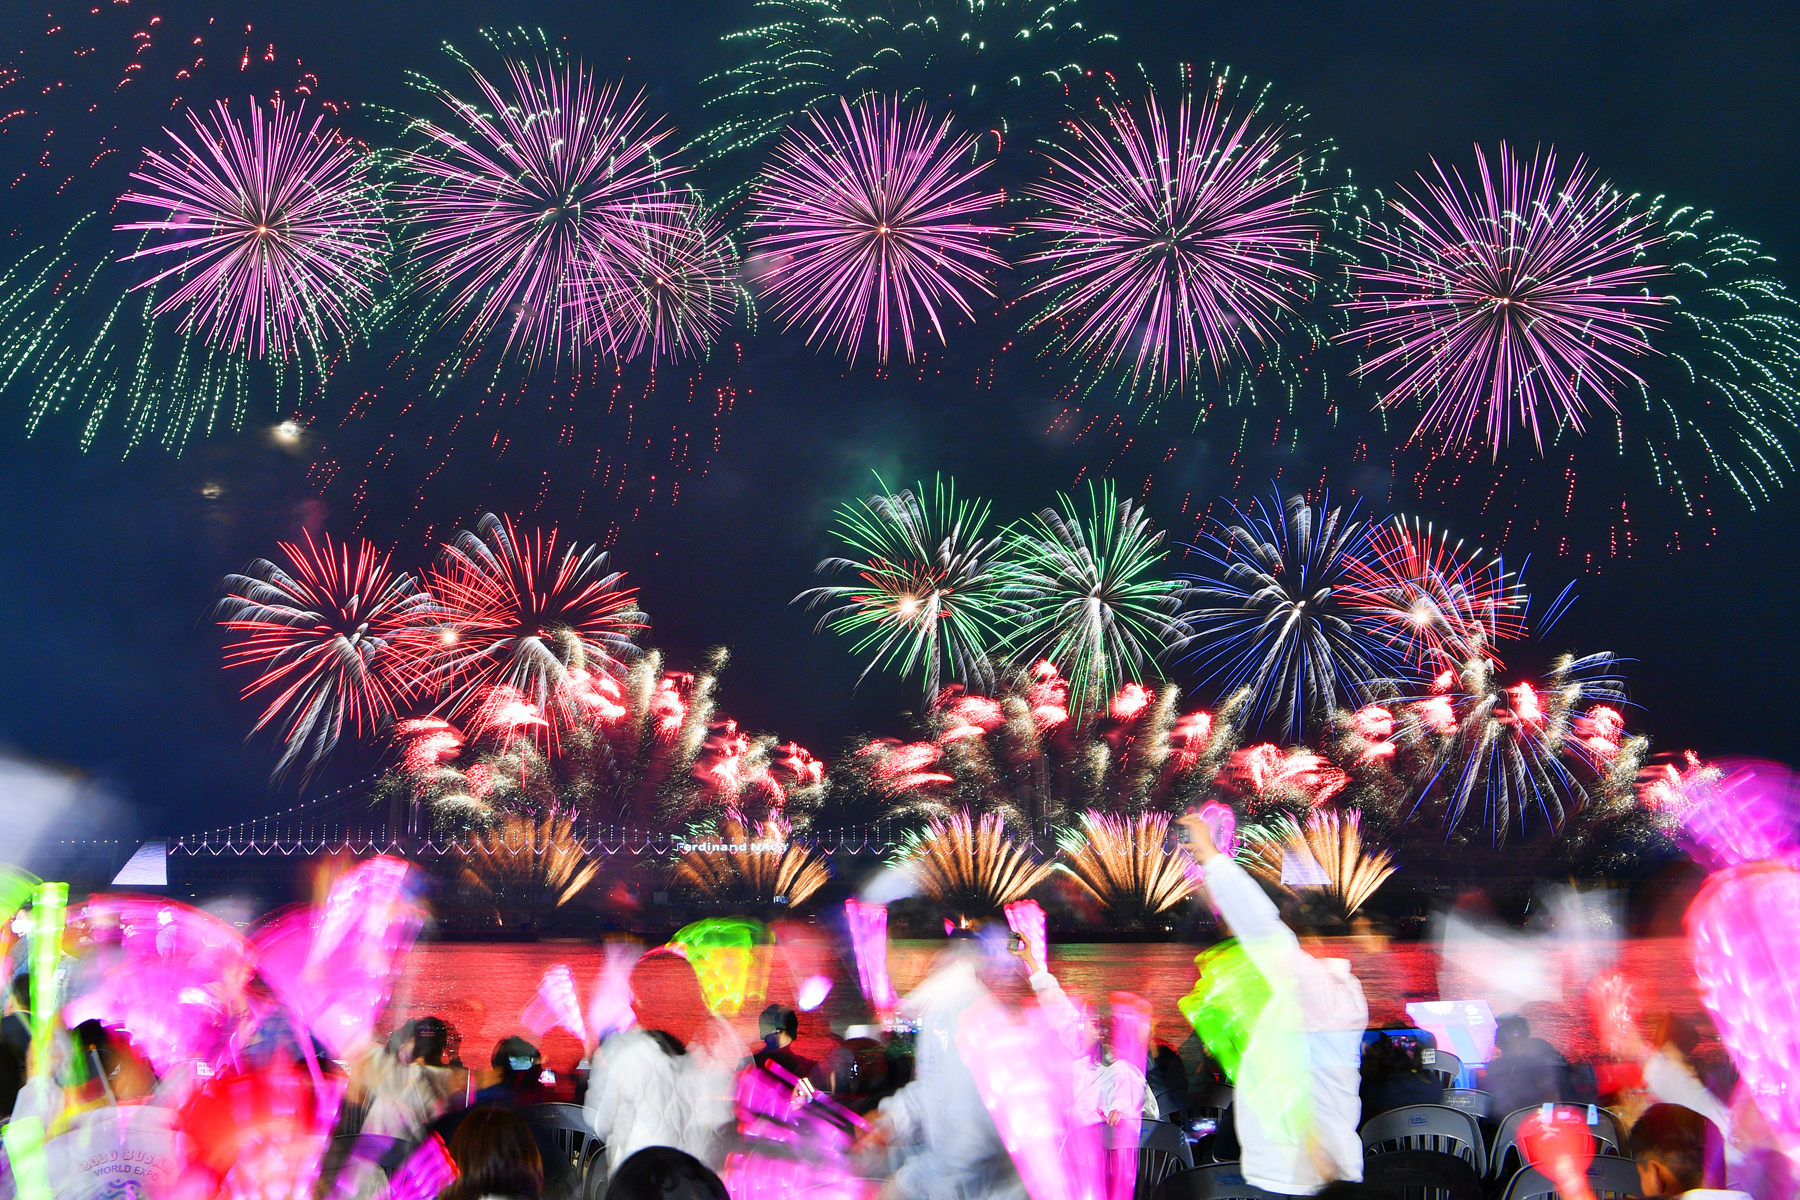 Busan’s fireworks mastery on display at Gwangalli Beach